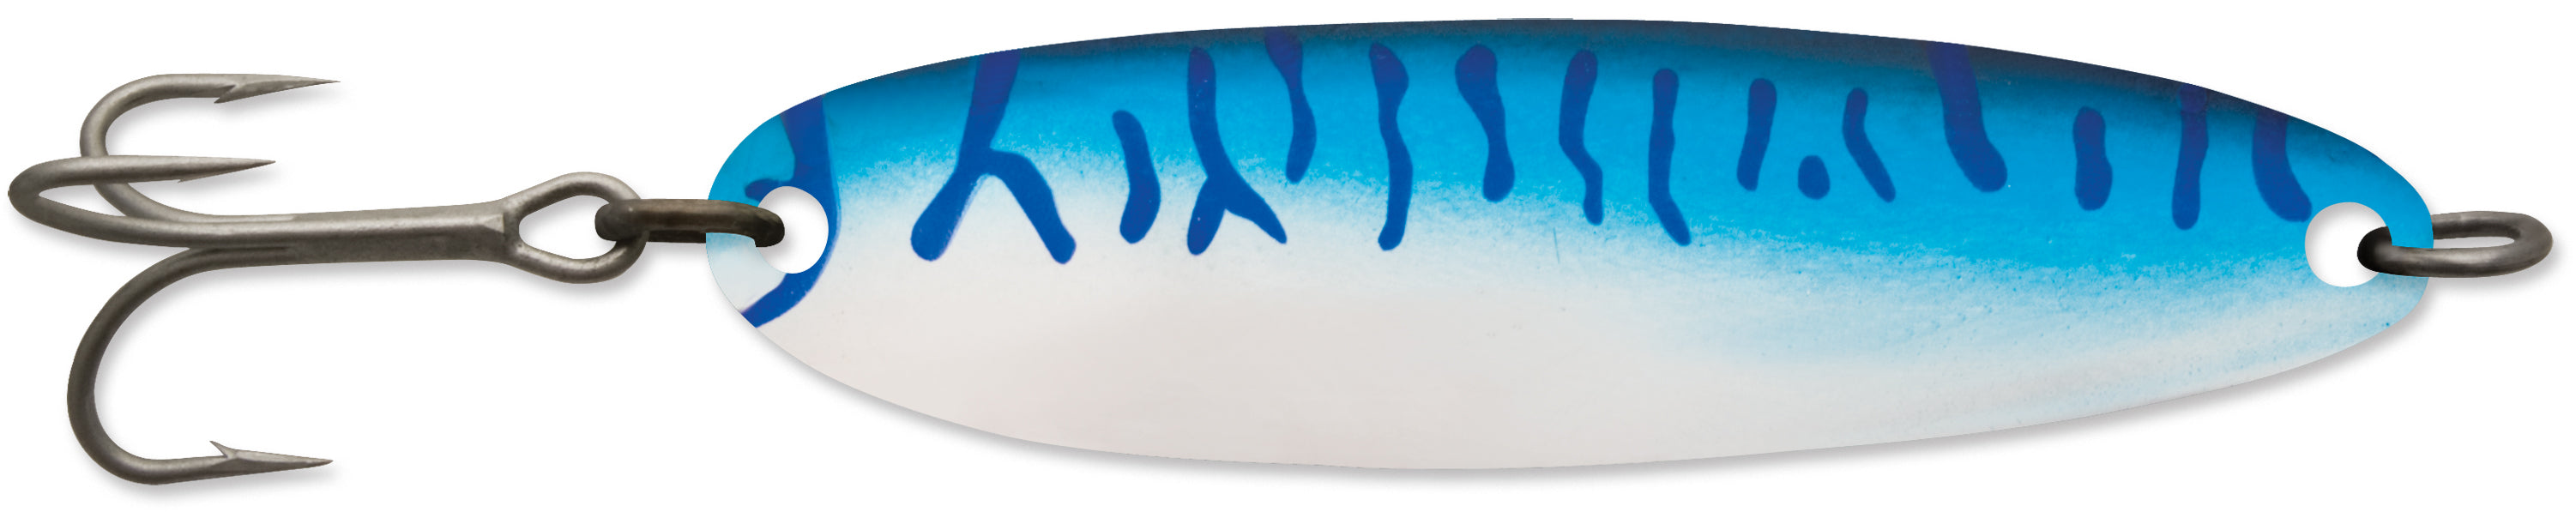 Luhr-Jensen Krocodile Spoon, Chrome/Blue Mackerel